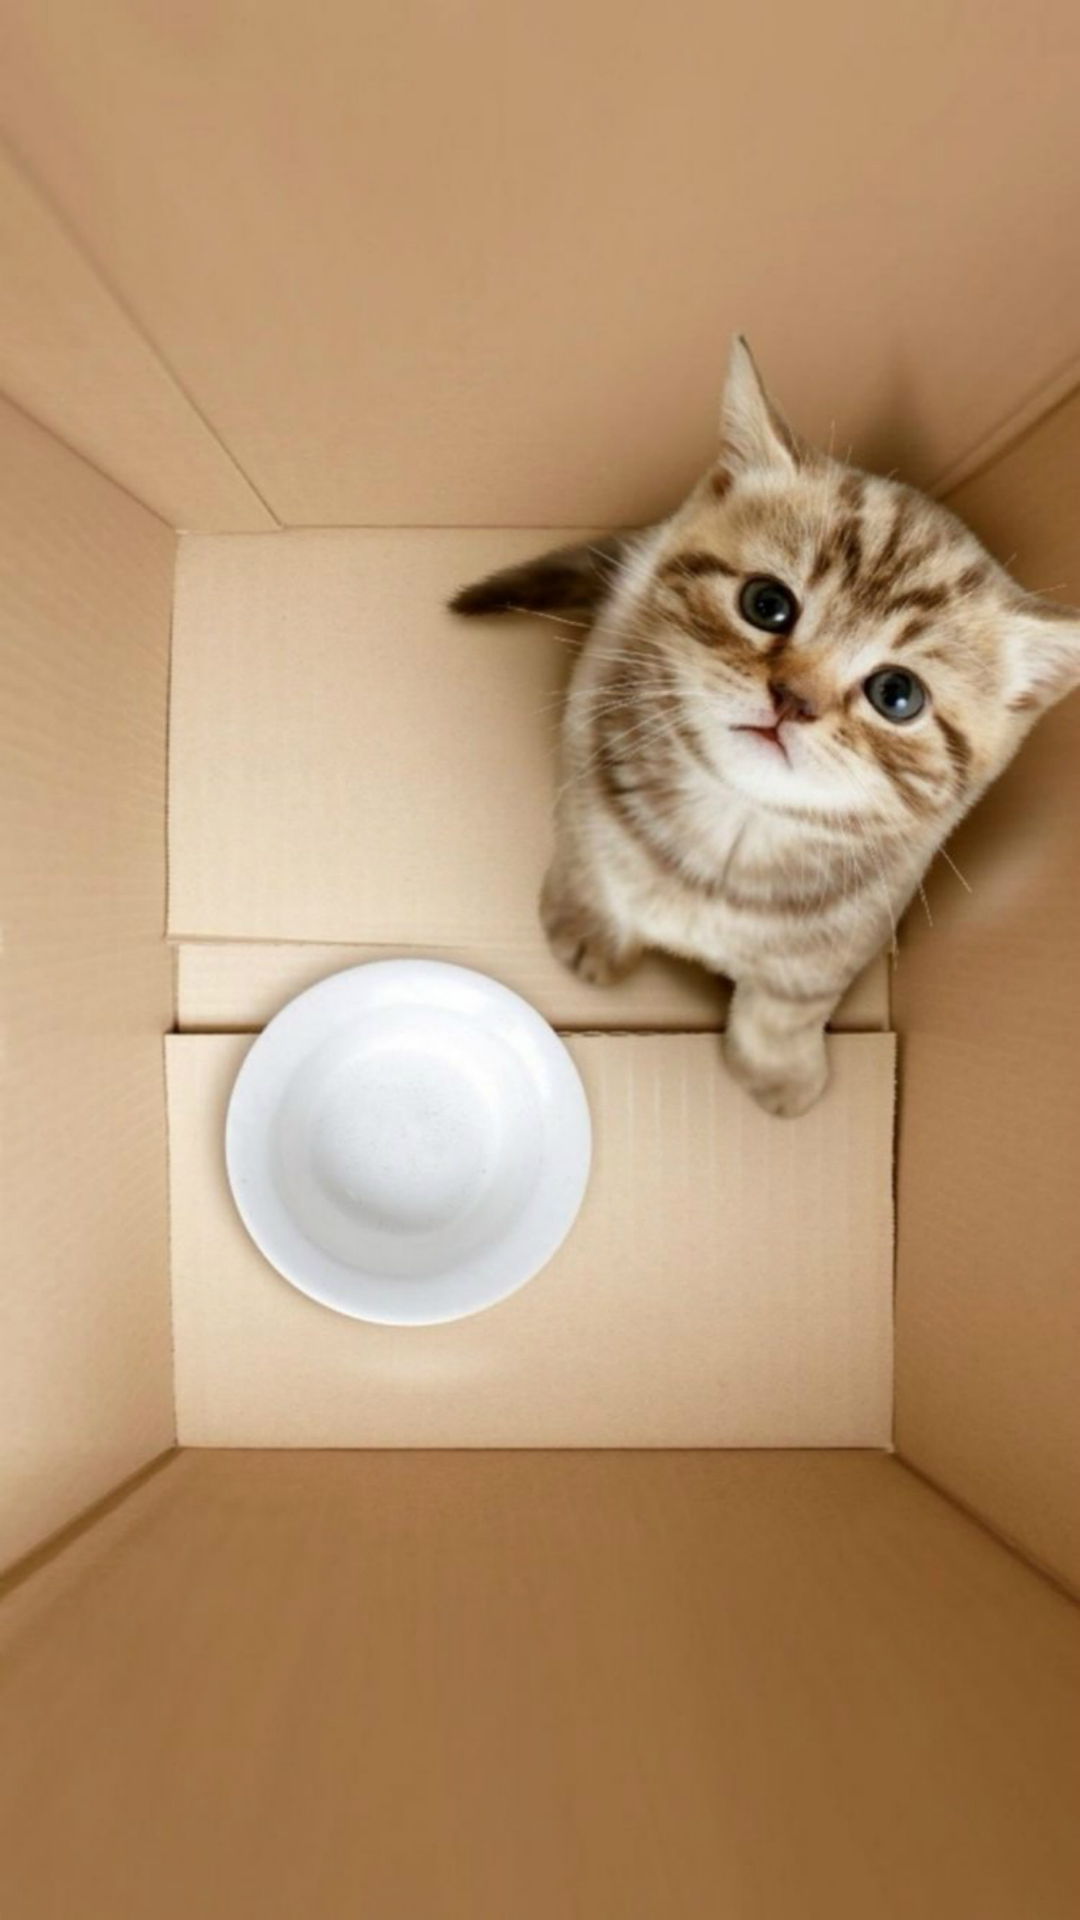 Dimensional 3D Poor Kitten In Box iPhone 6 wallpaper